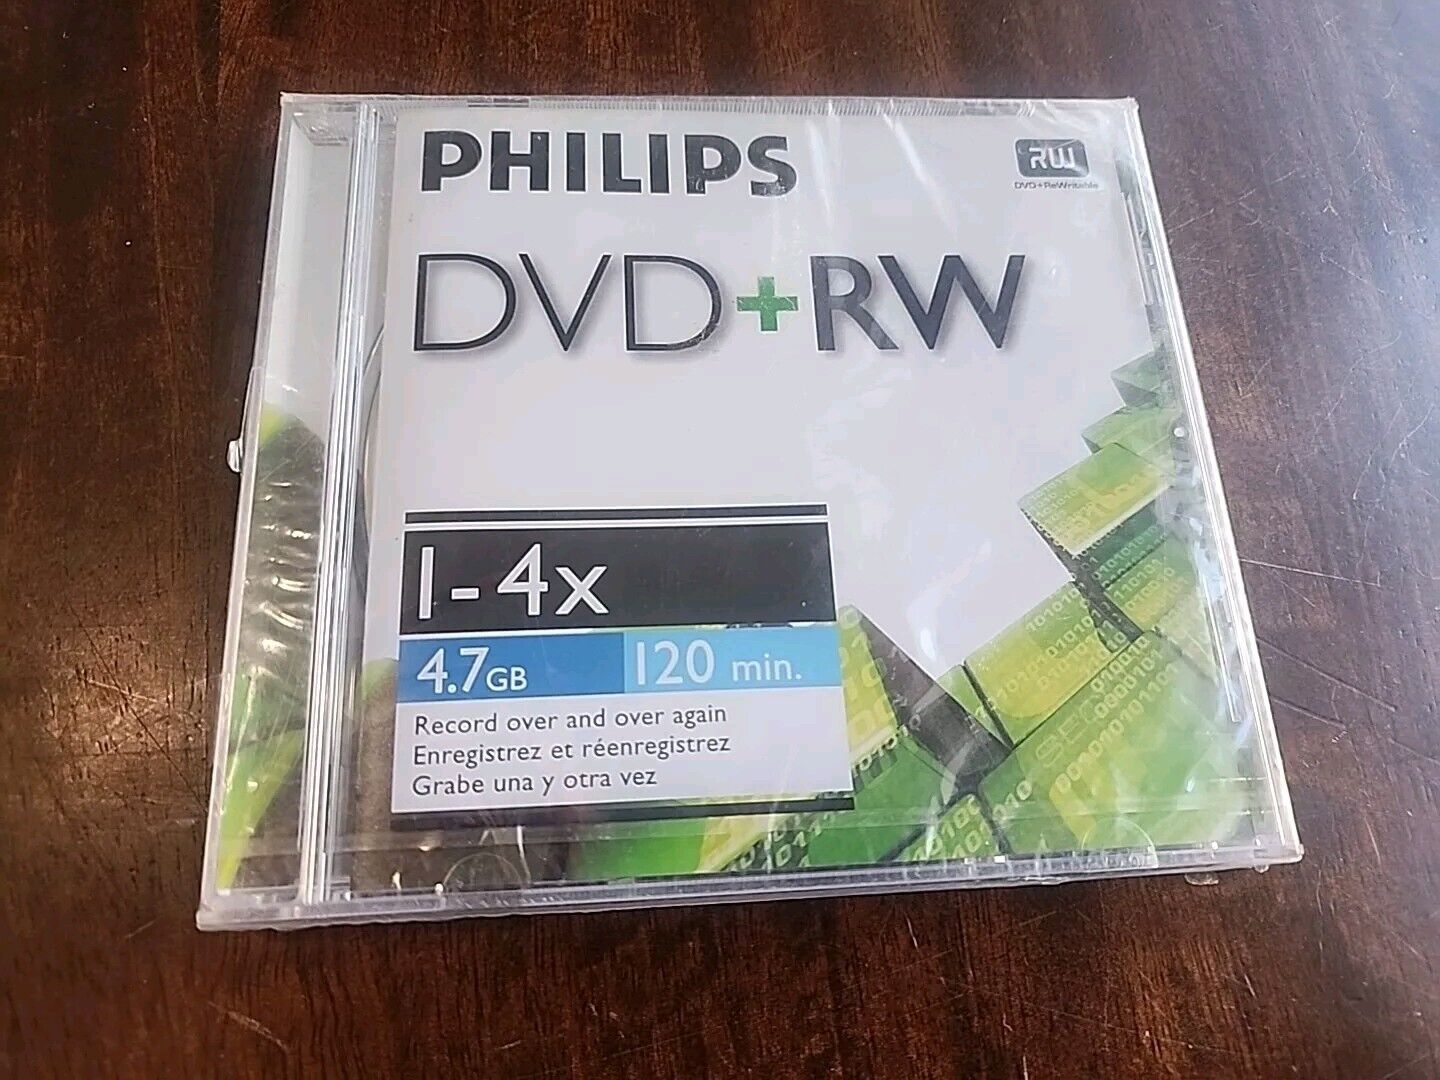 One Philips DVD+RW Re-Writable 120 Min 4.7 GB 1-4x New